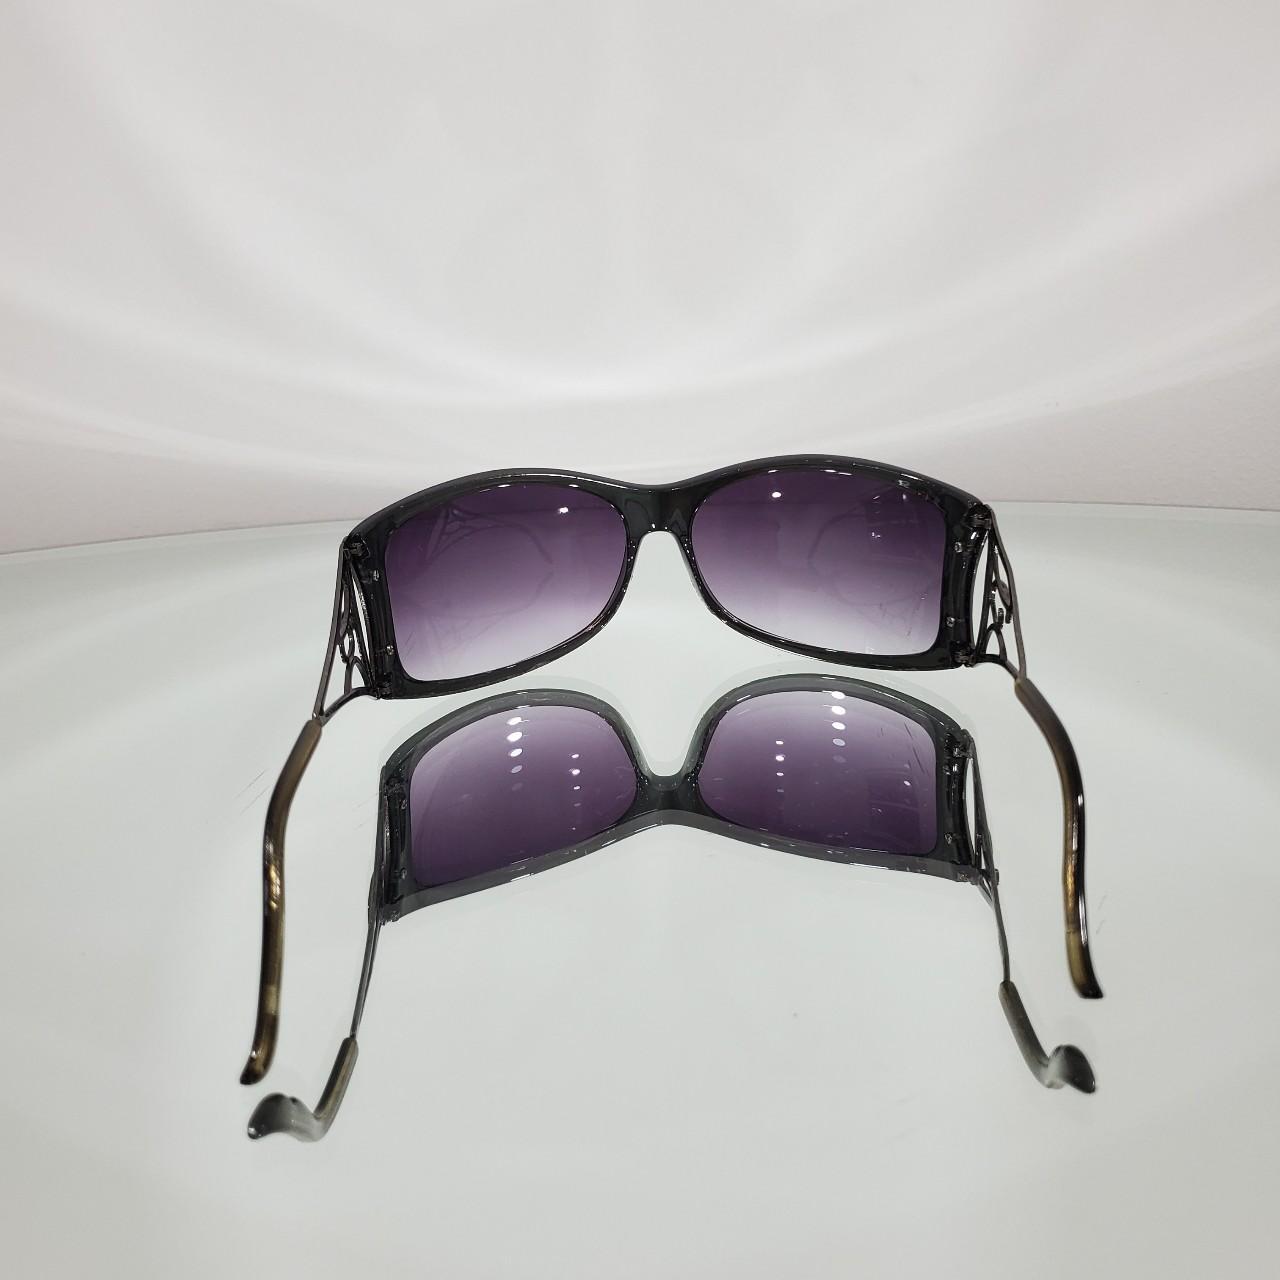 Women's Black and Silver Sunglasses (2)